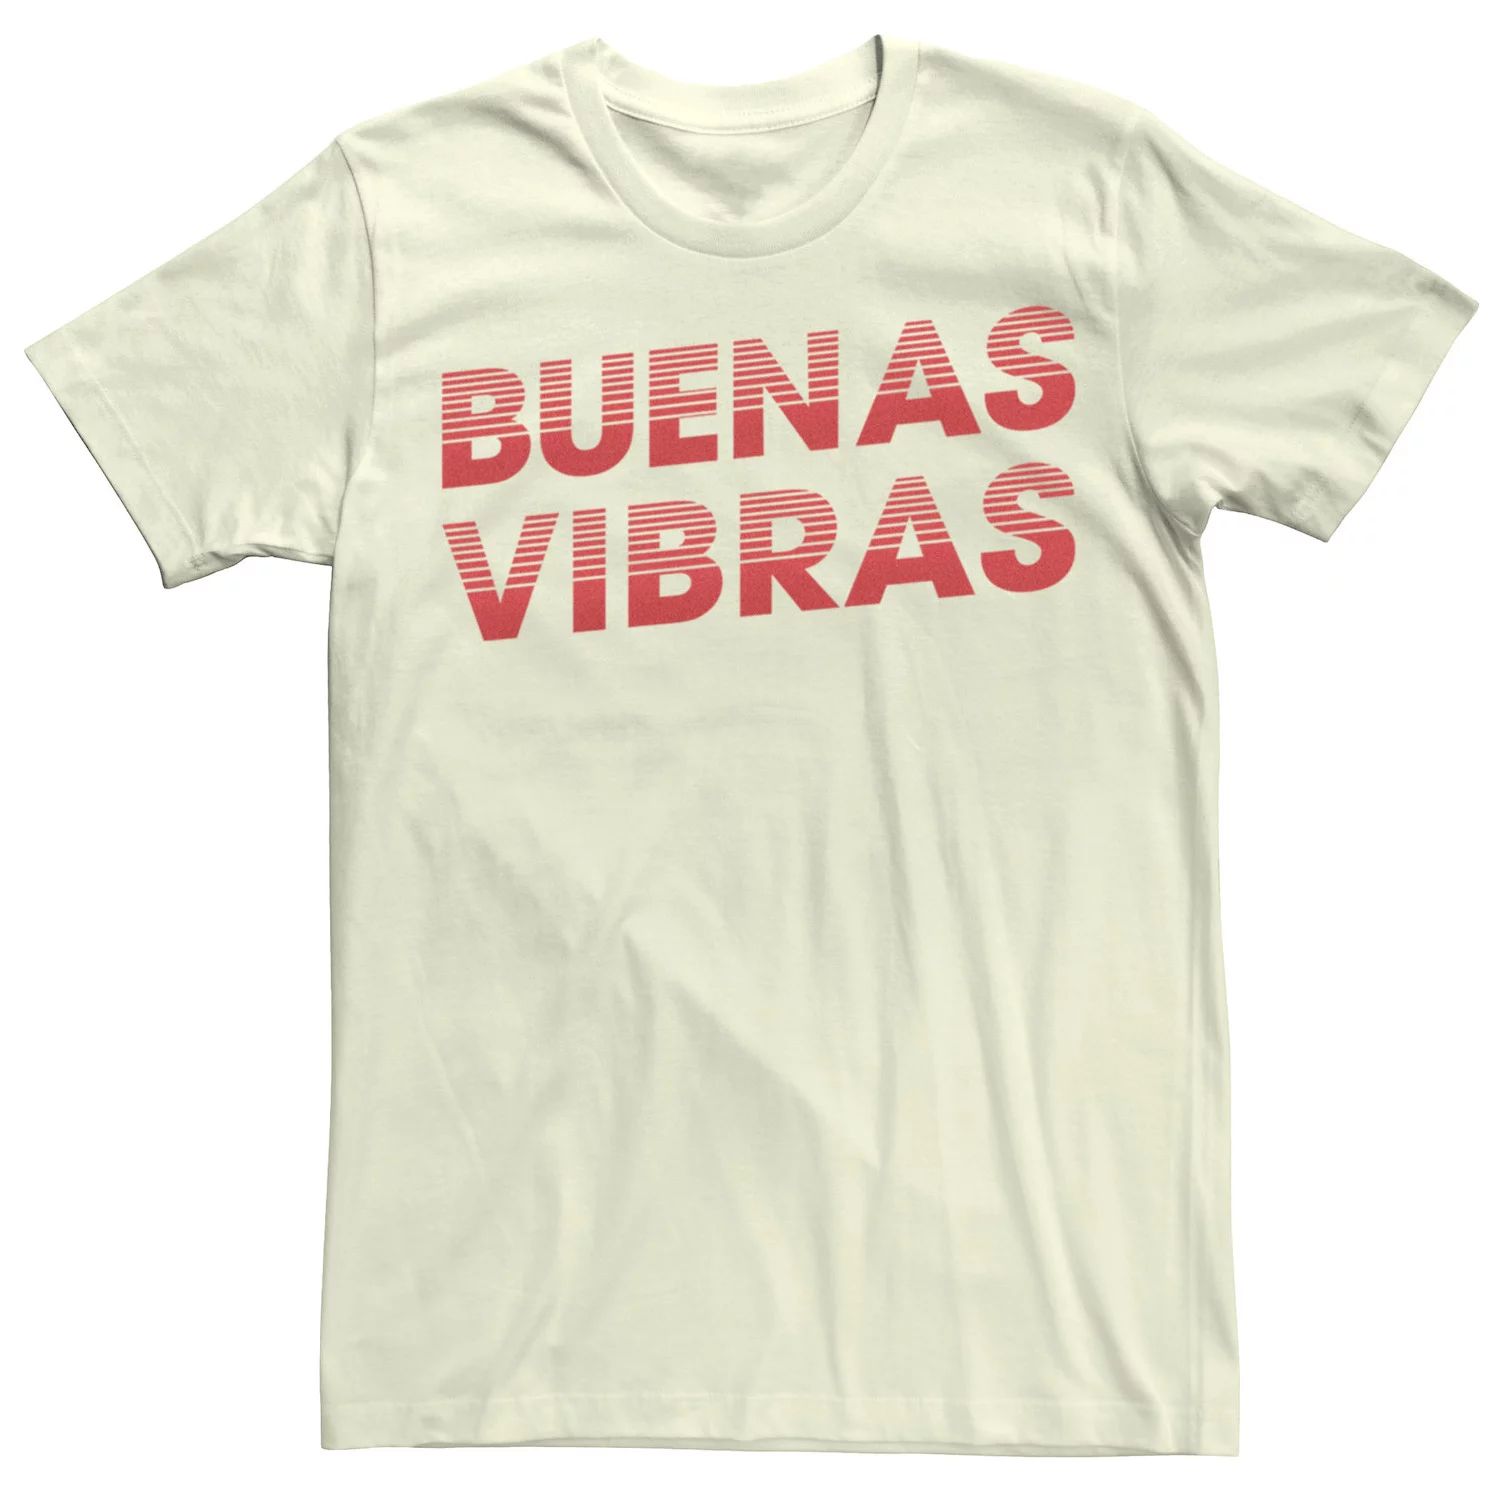 цена Мужская футболка Vibras Buenas Vintage с текстом Licensed Character